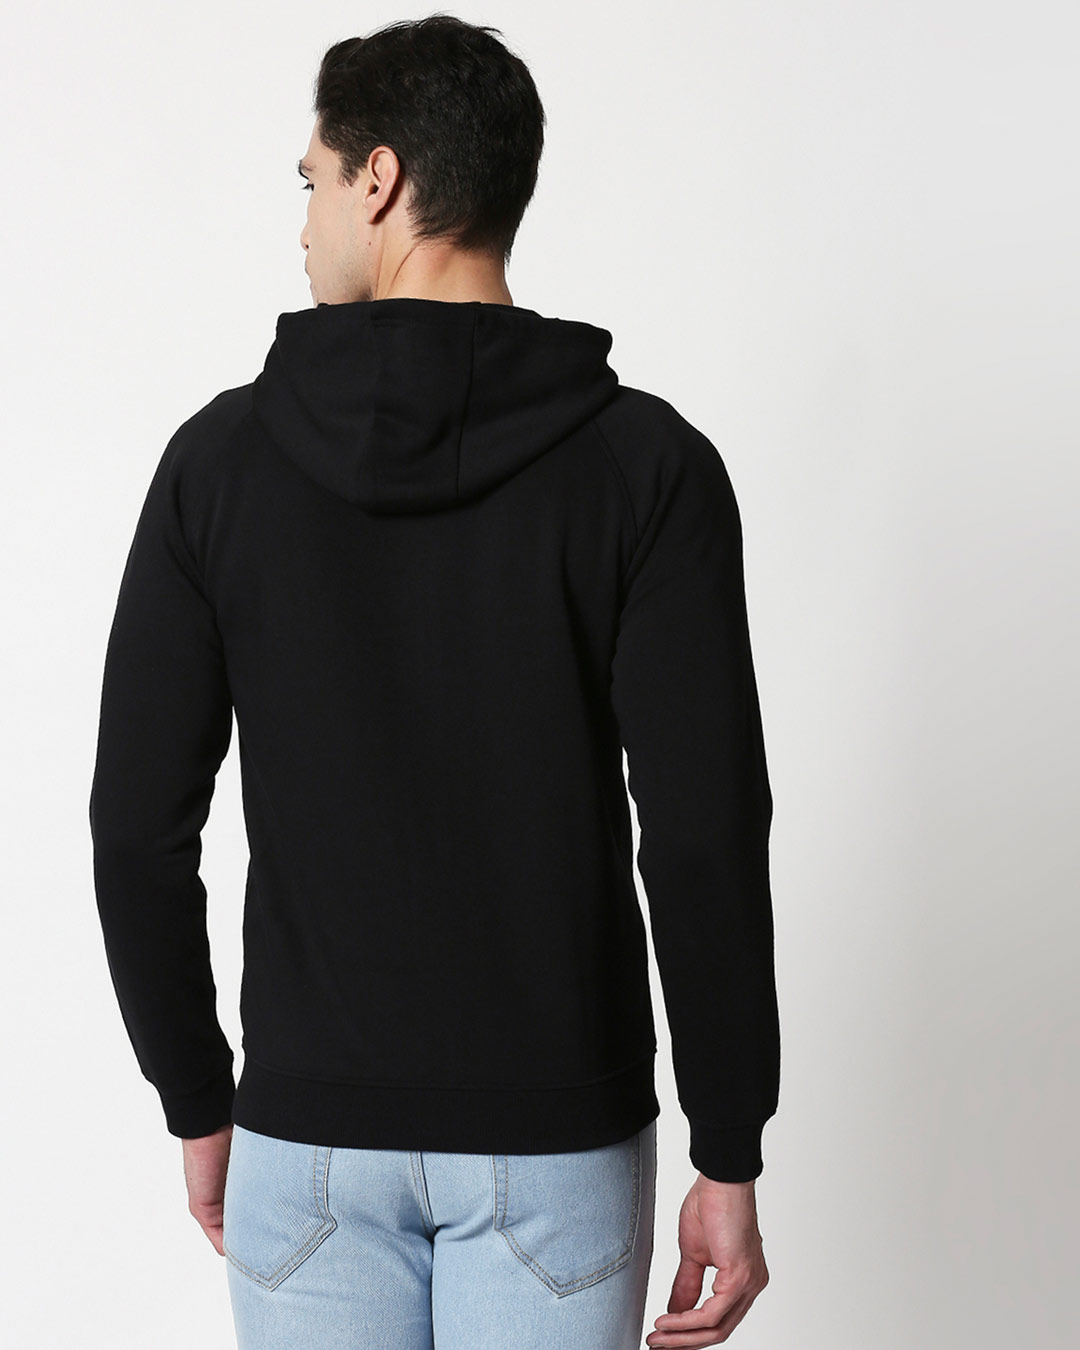 Shop Believe In Yourself Hoodie Sweatshirt Black-Back